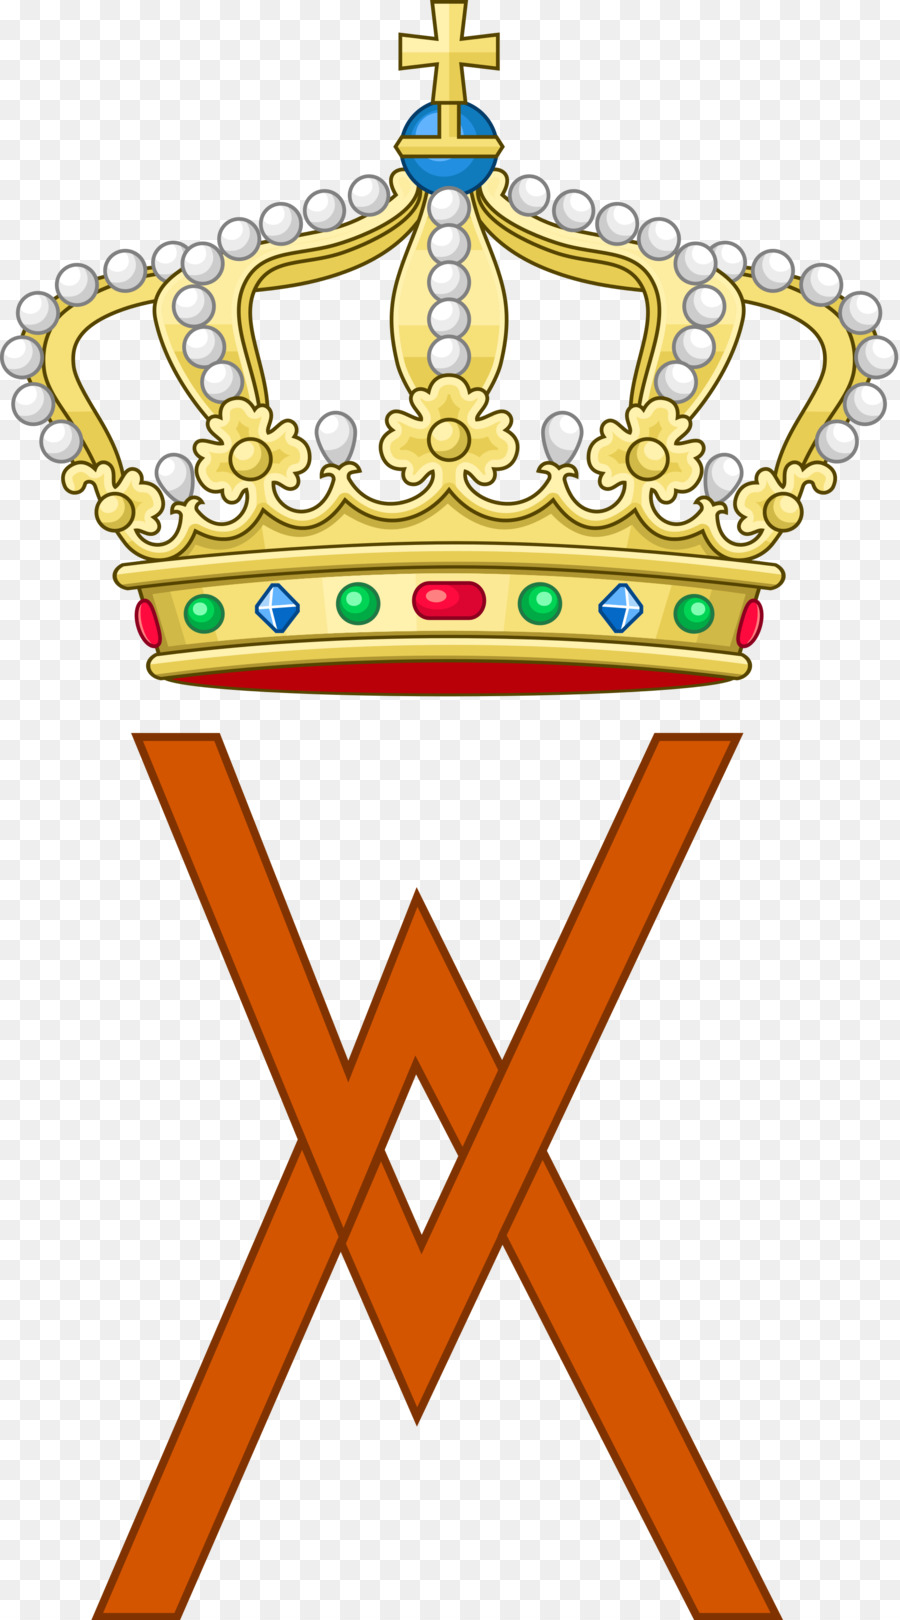 Royal cypher Corona Coroa reale famiglia Araldica - principe